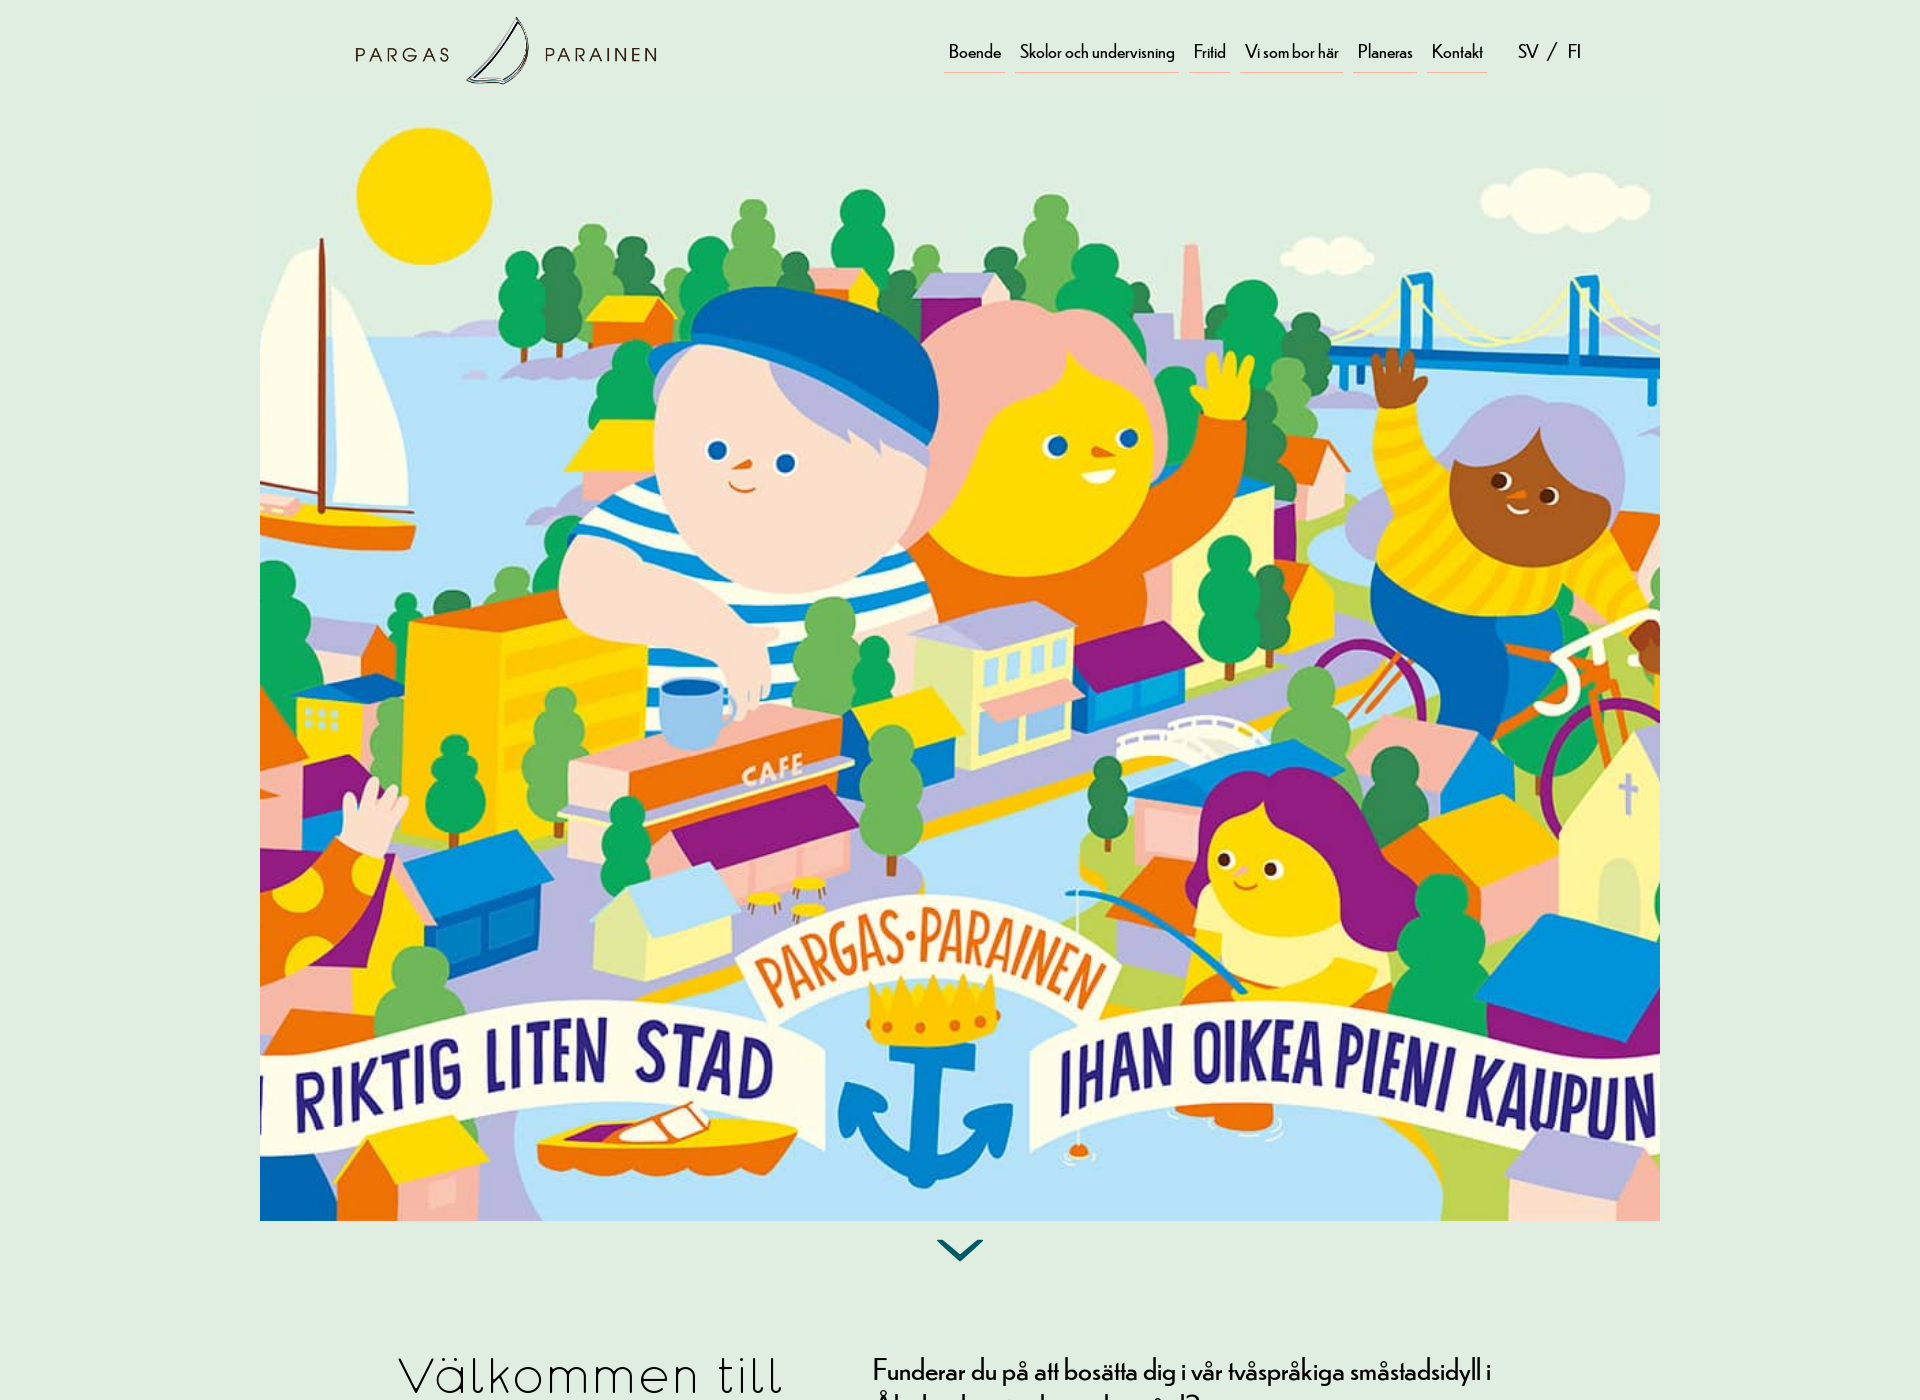 Screenshot for enriktiglitenstad.fi